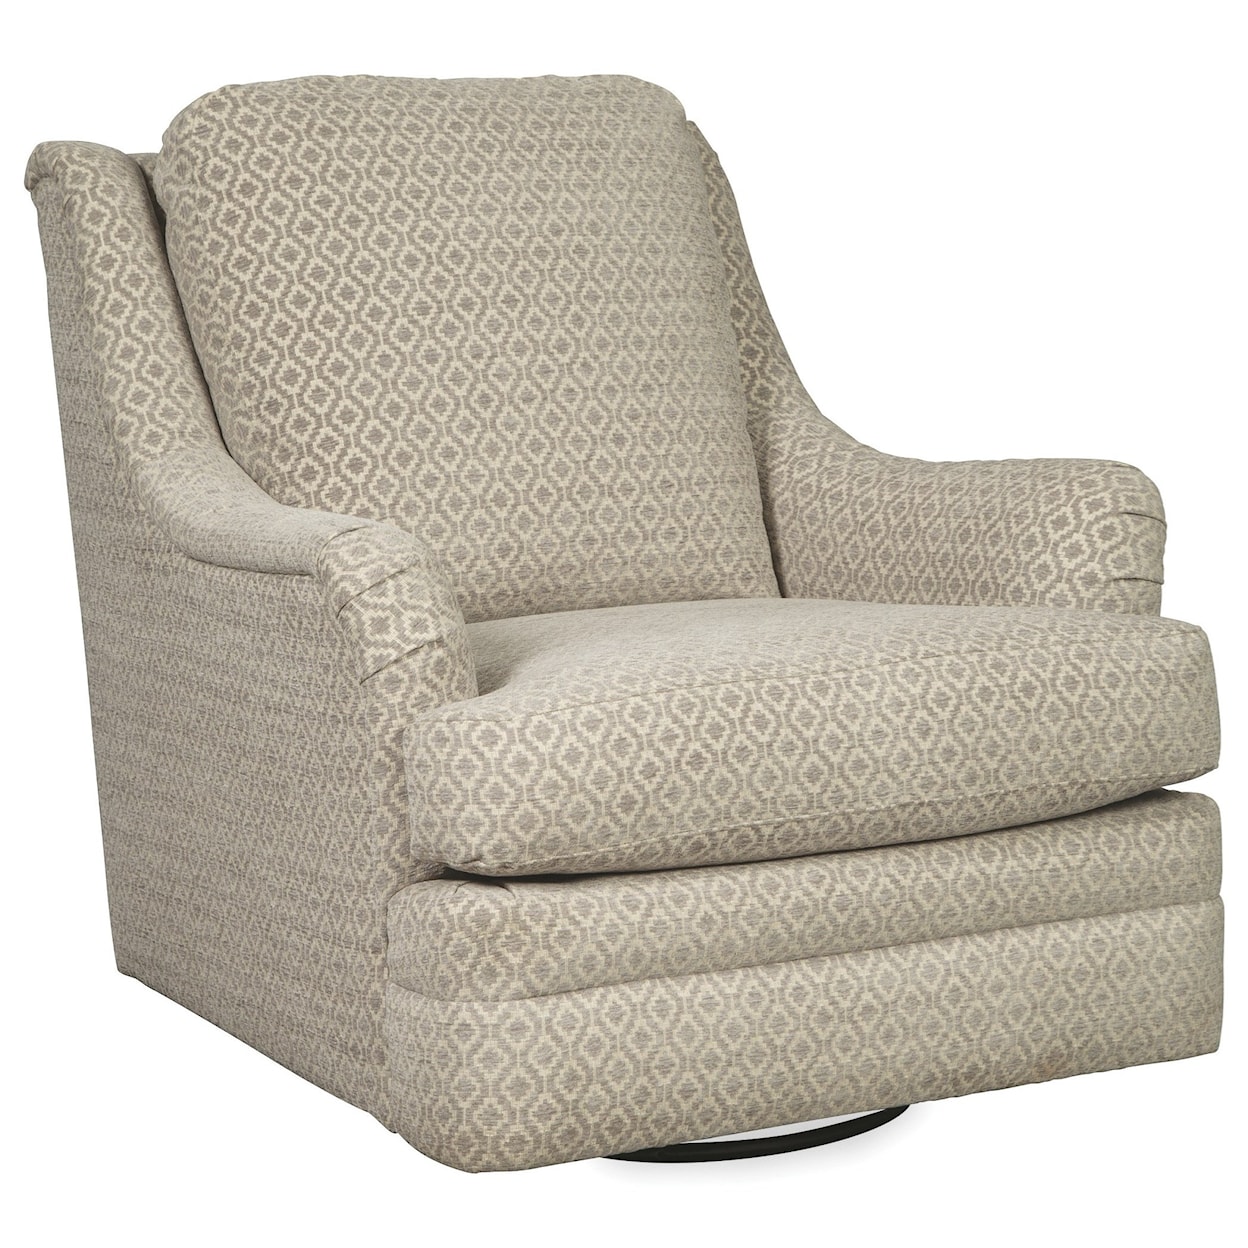 Craftmaster 084410 Swivel Chair